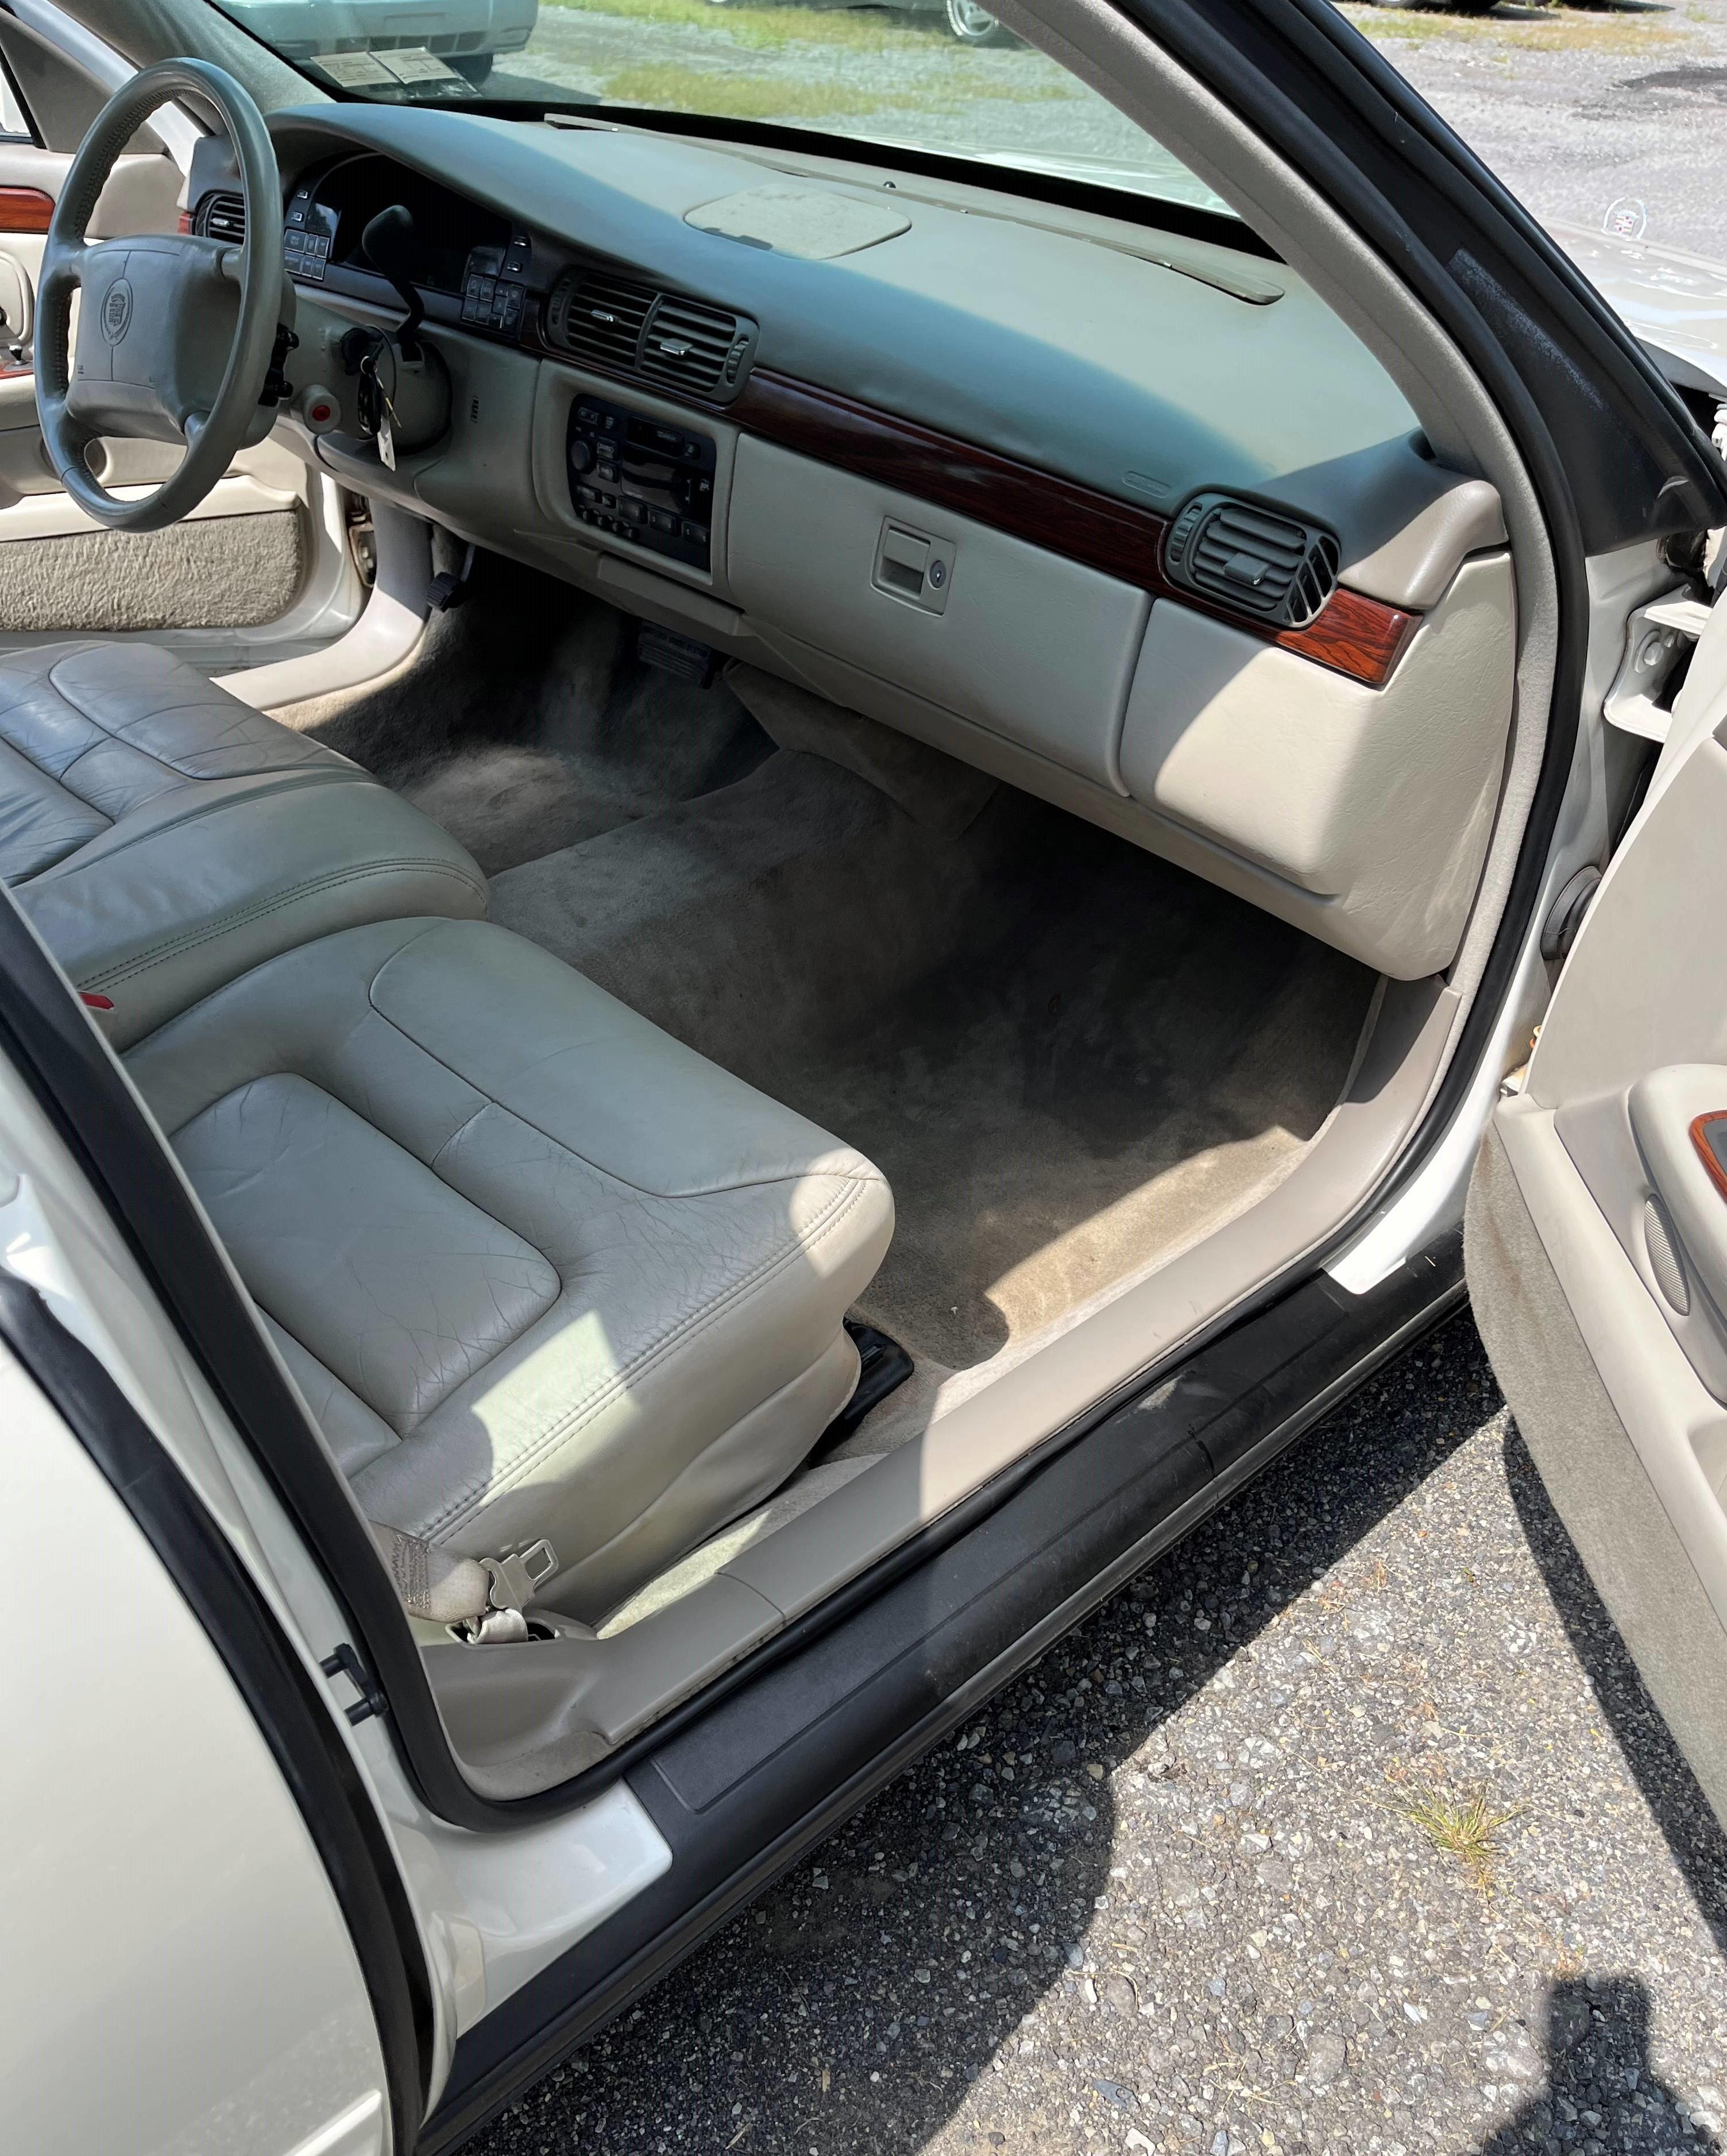 1999 Cadillac Sedan Deville.Very clean Sedan Deville.45,000 original miles.